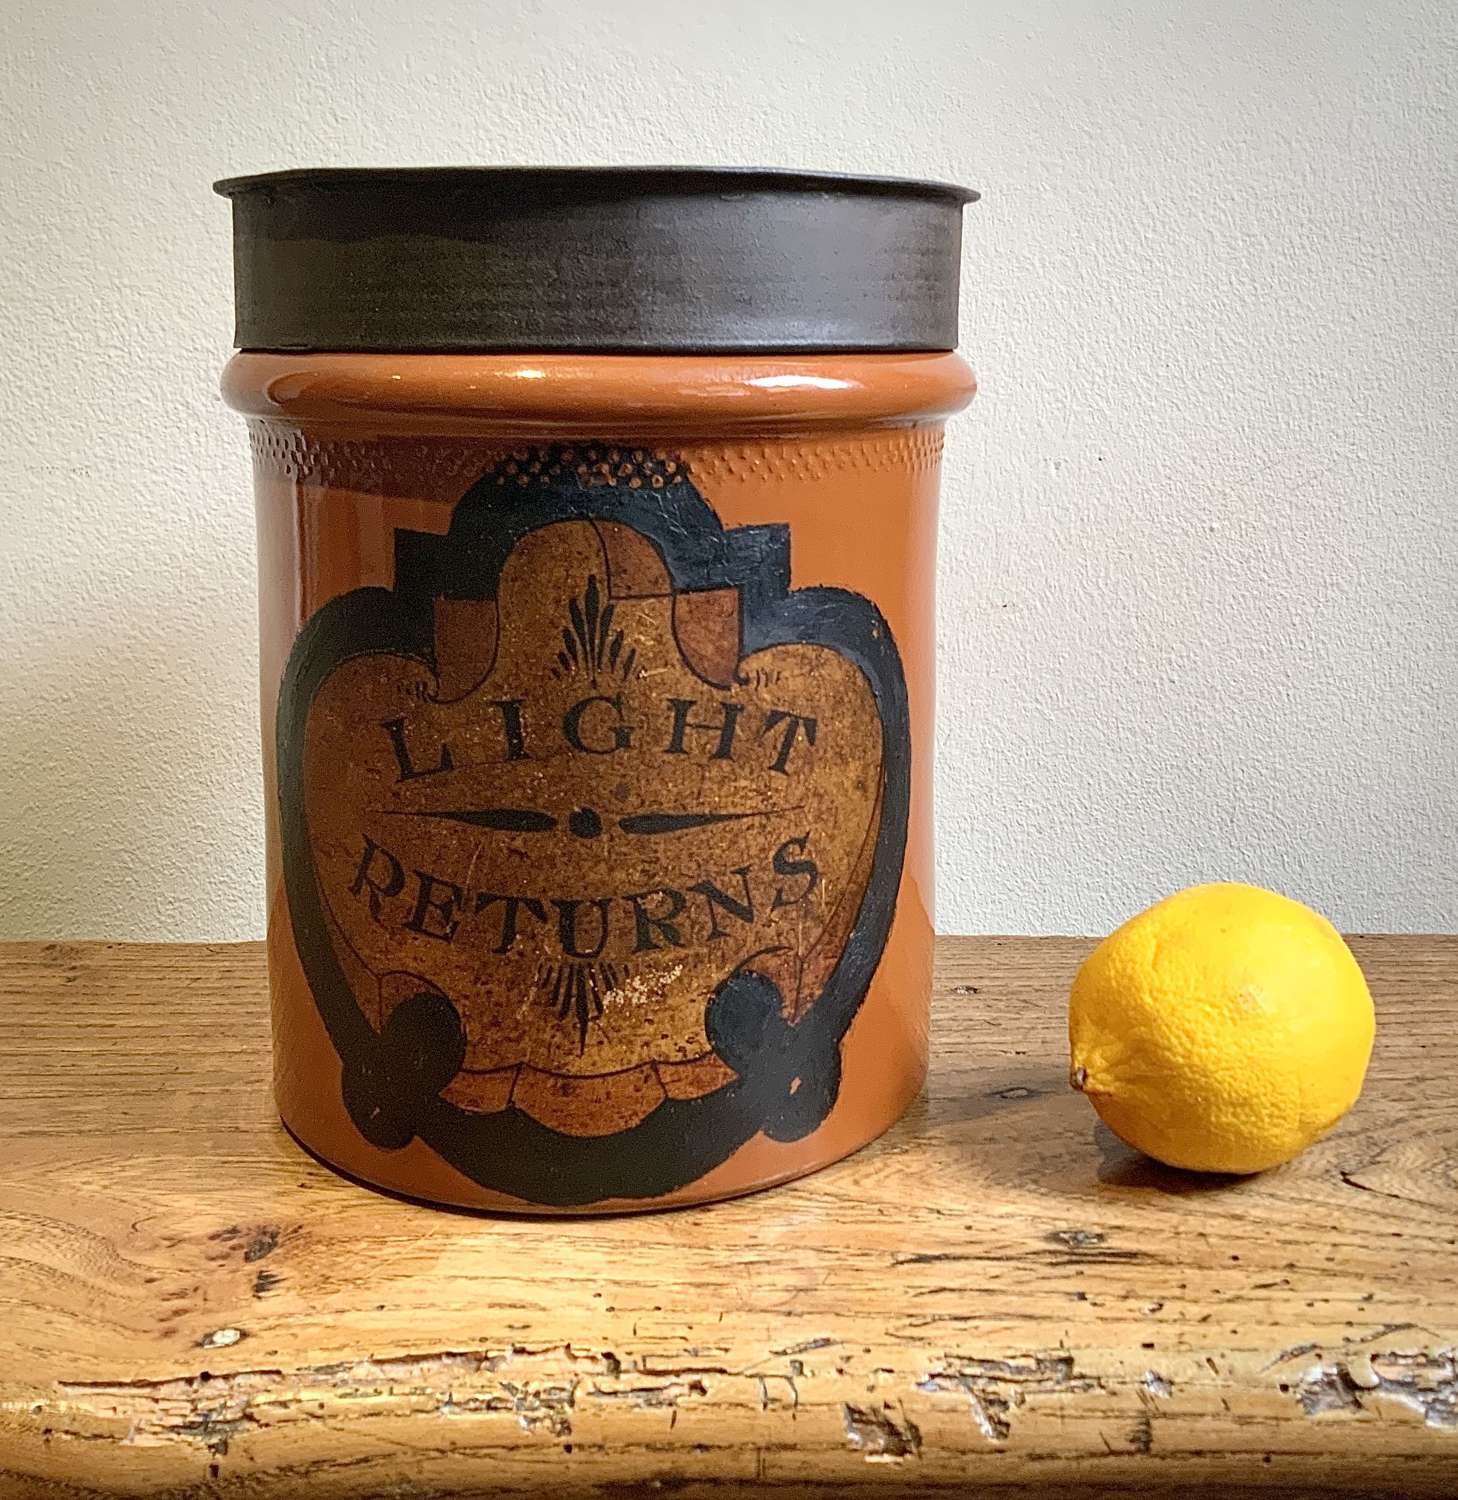 Antique Tobacconist Shop Jar Original Painted ‘Light Returns’ Label